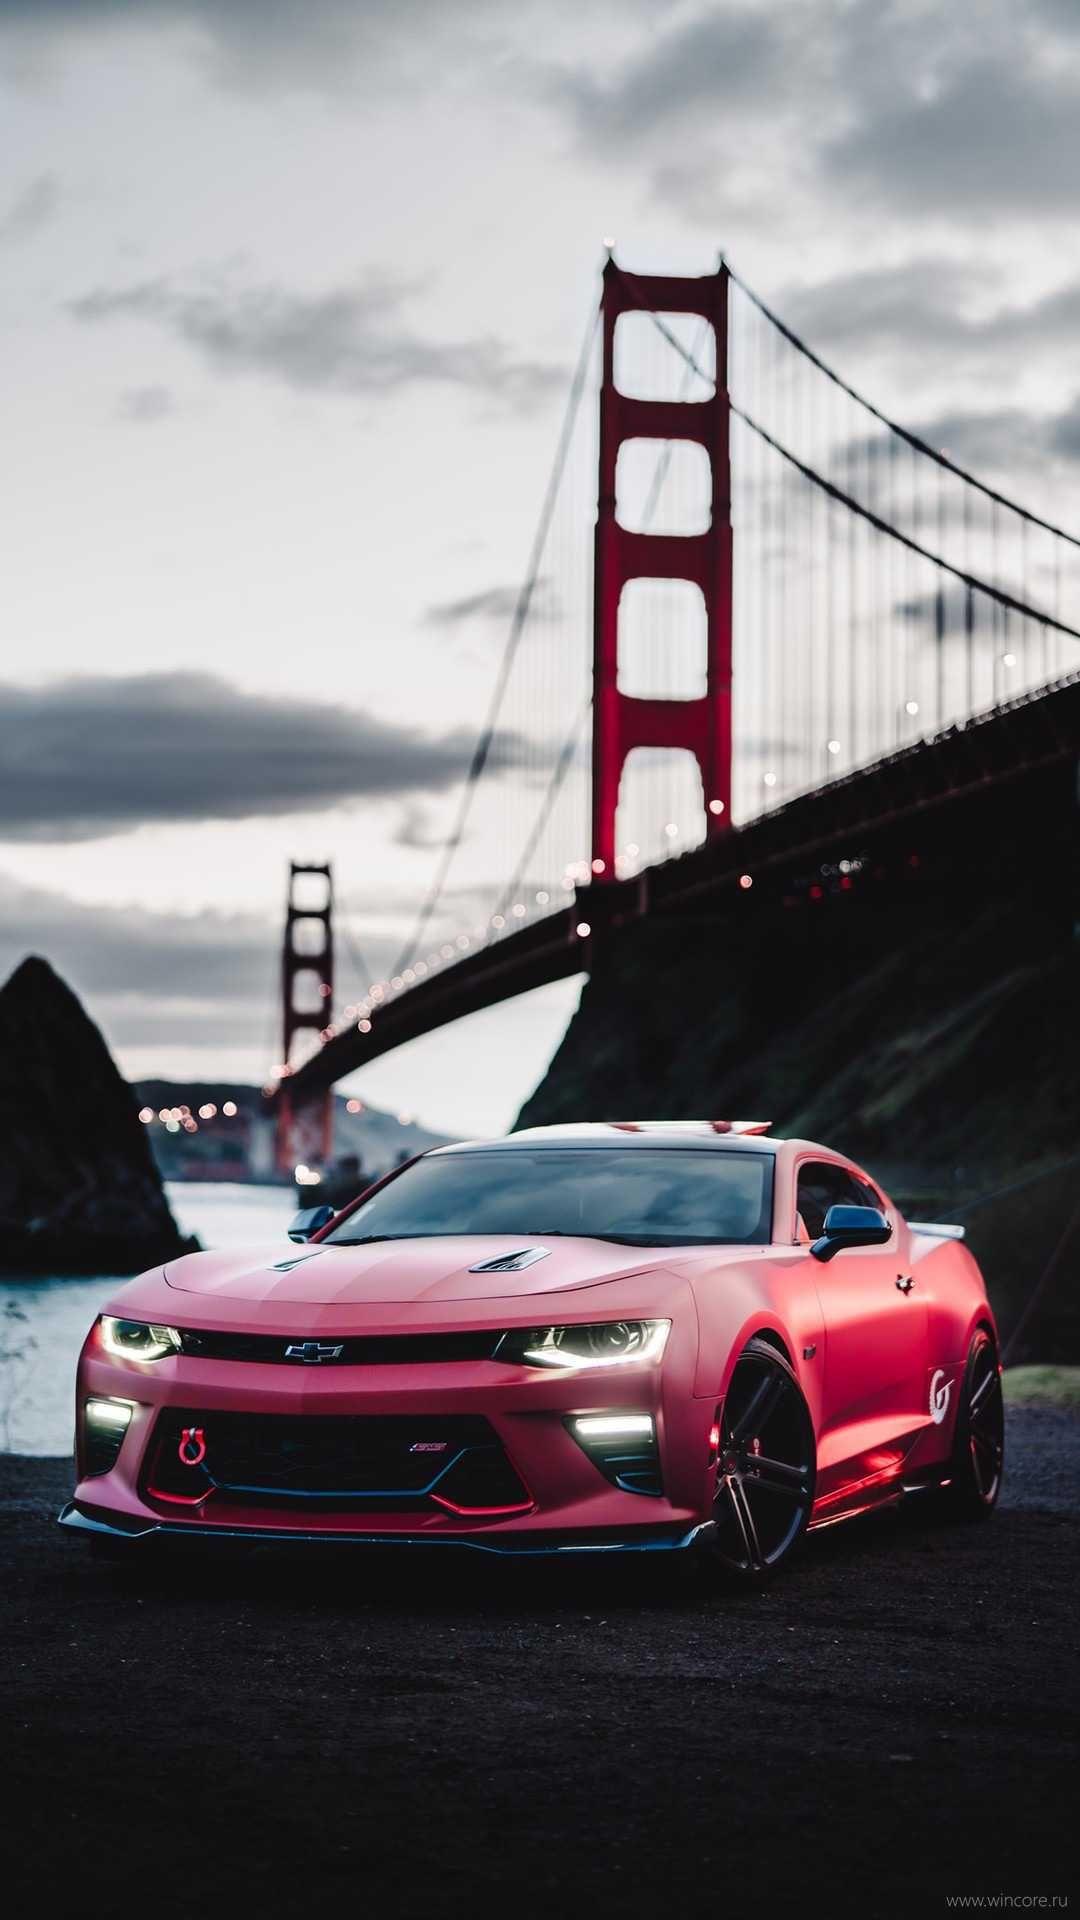 Chevrolet Camaro Golden Gate Bridge iPhone Wallpaper. Car iphone